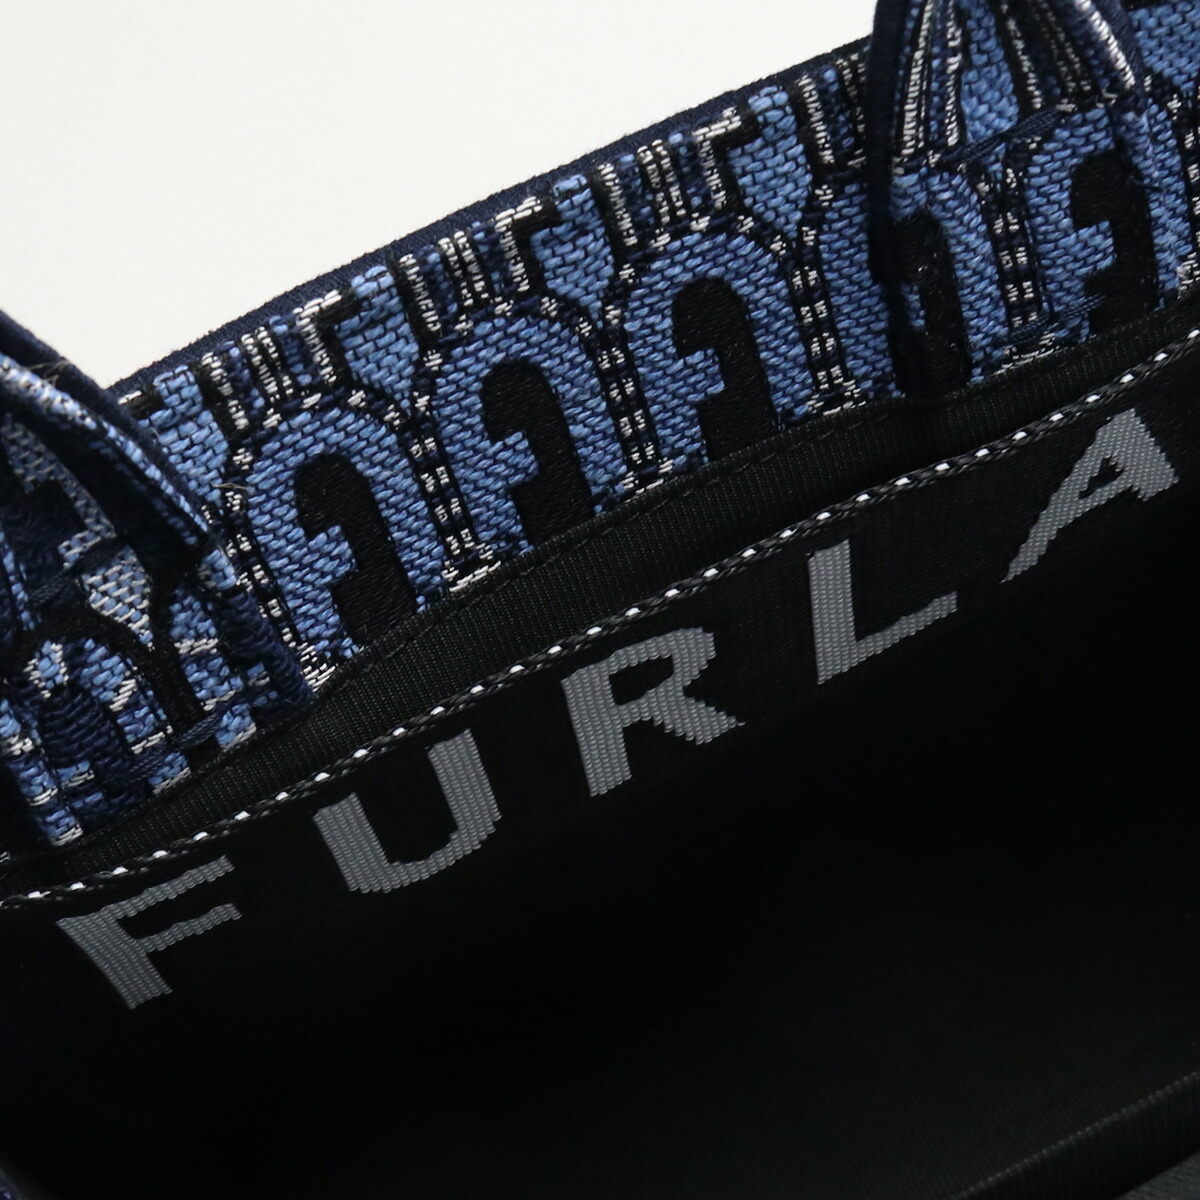 Armerie Boutique フルラ FURLA FURLA OPPORTUNITY トートバッグ ブランド バッグ WB00352  AX0777 TDE00 TONI BLU DENIM ブルー系 マルチカラー bag-01